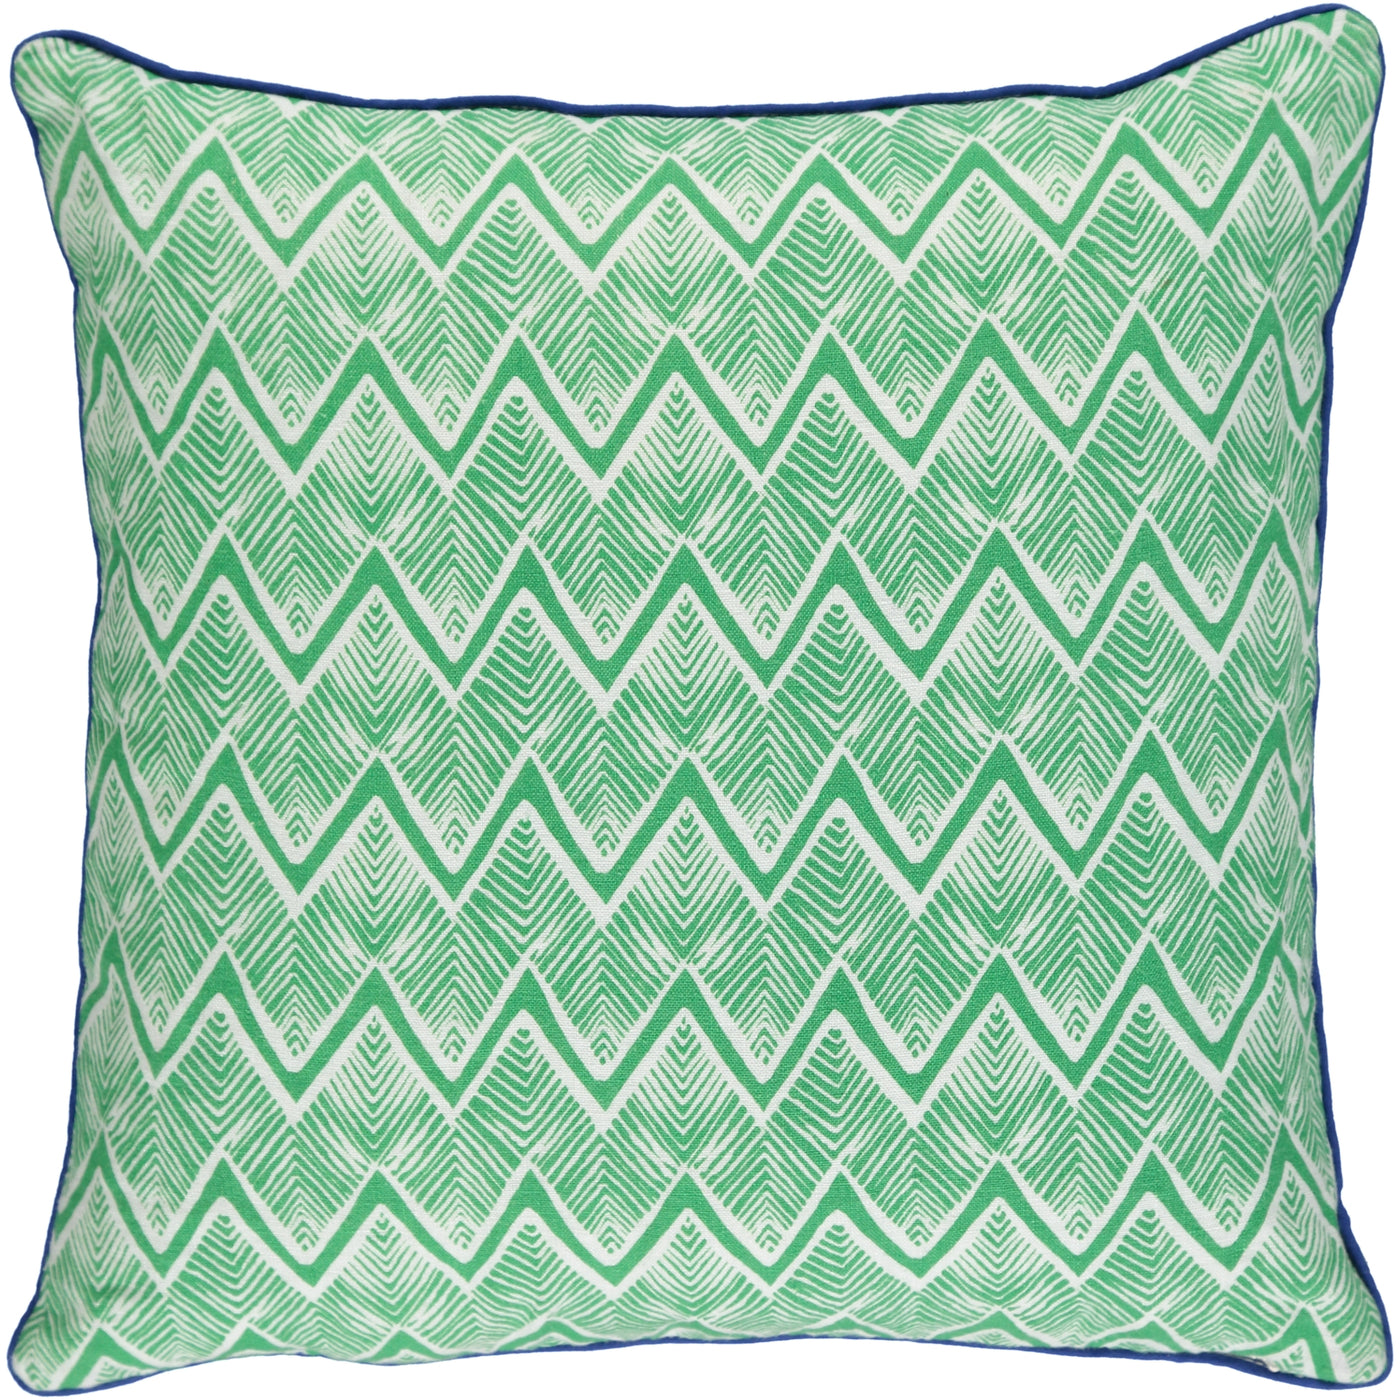 Kitty Holmes Green cushion cover zig zag print